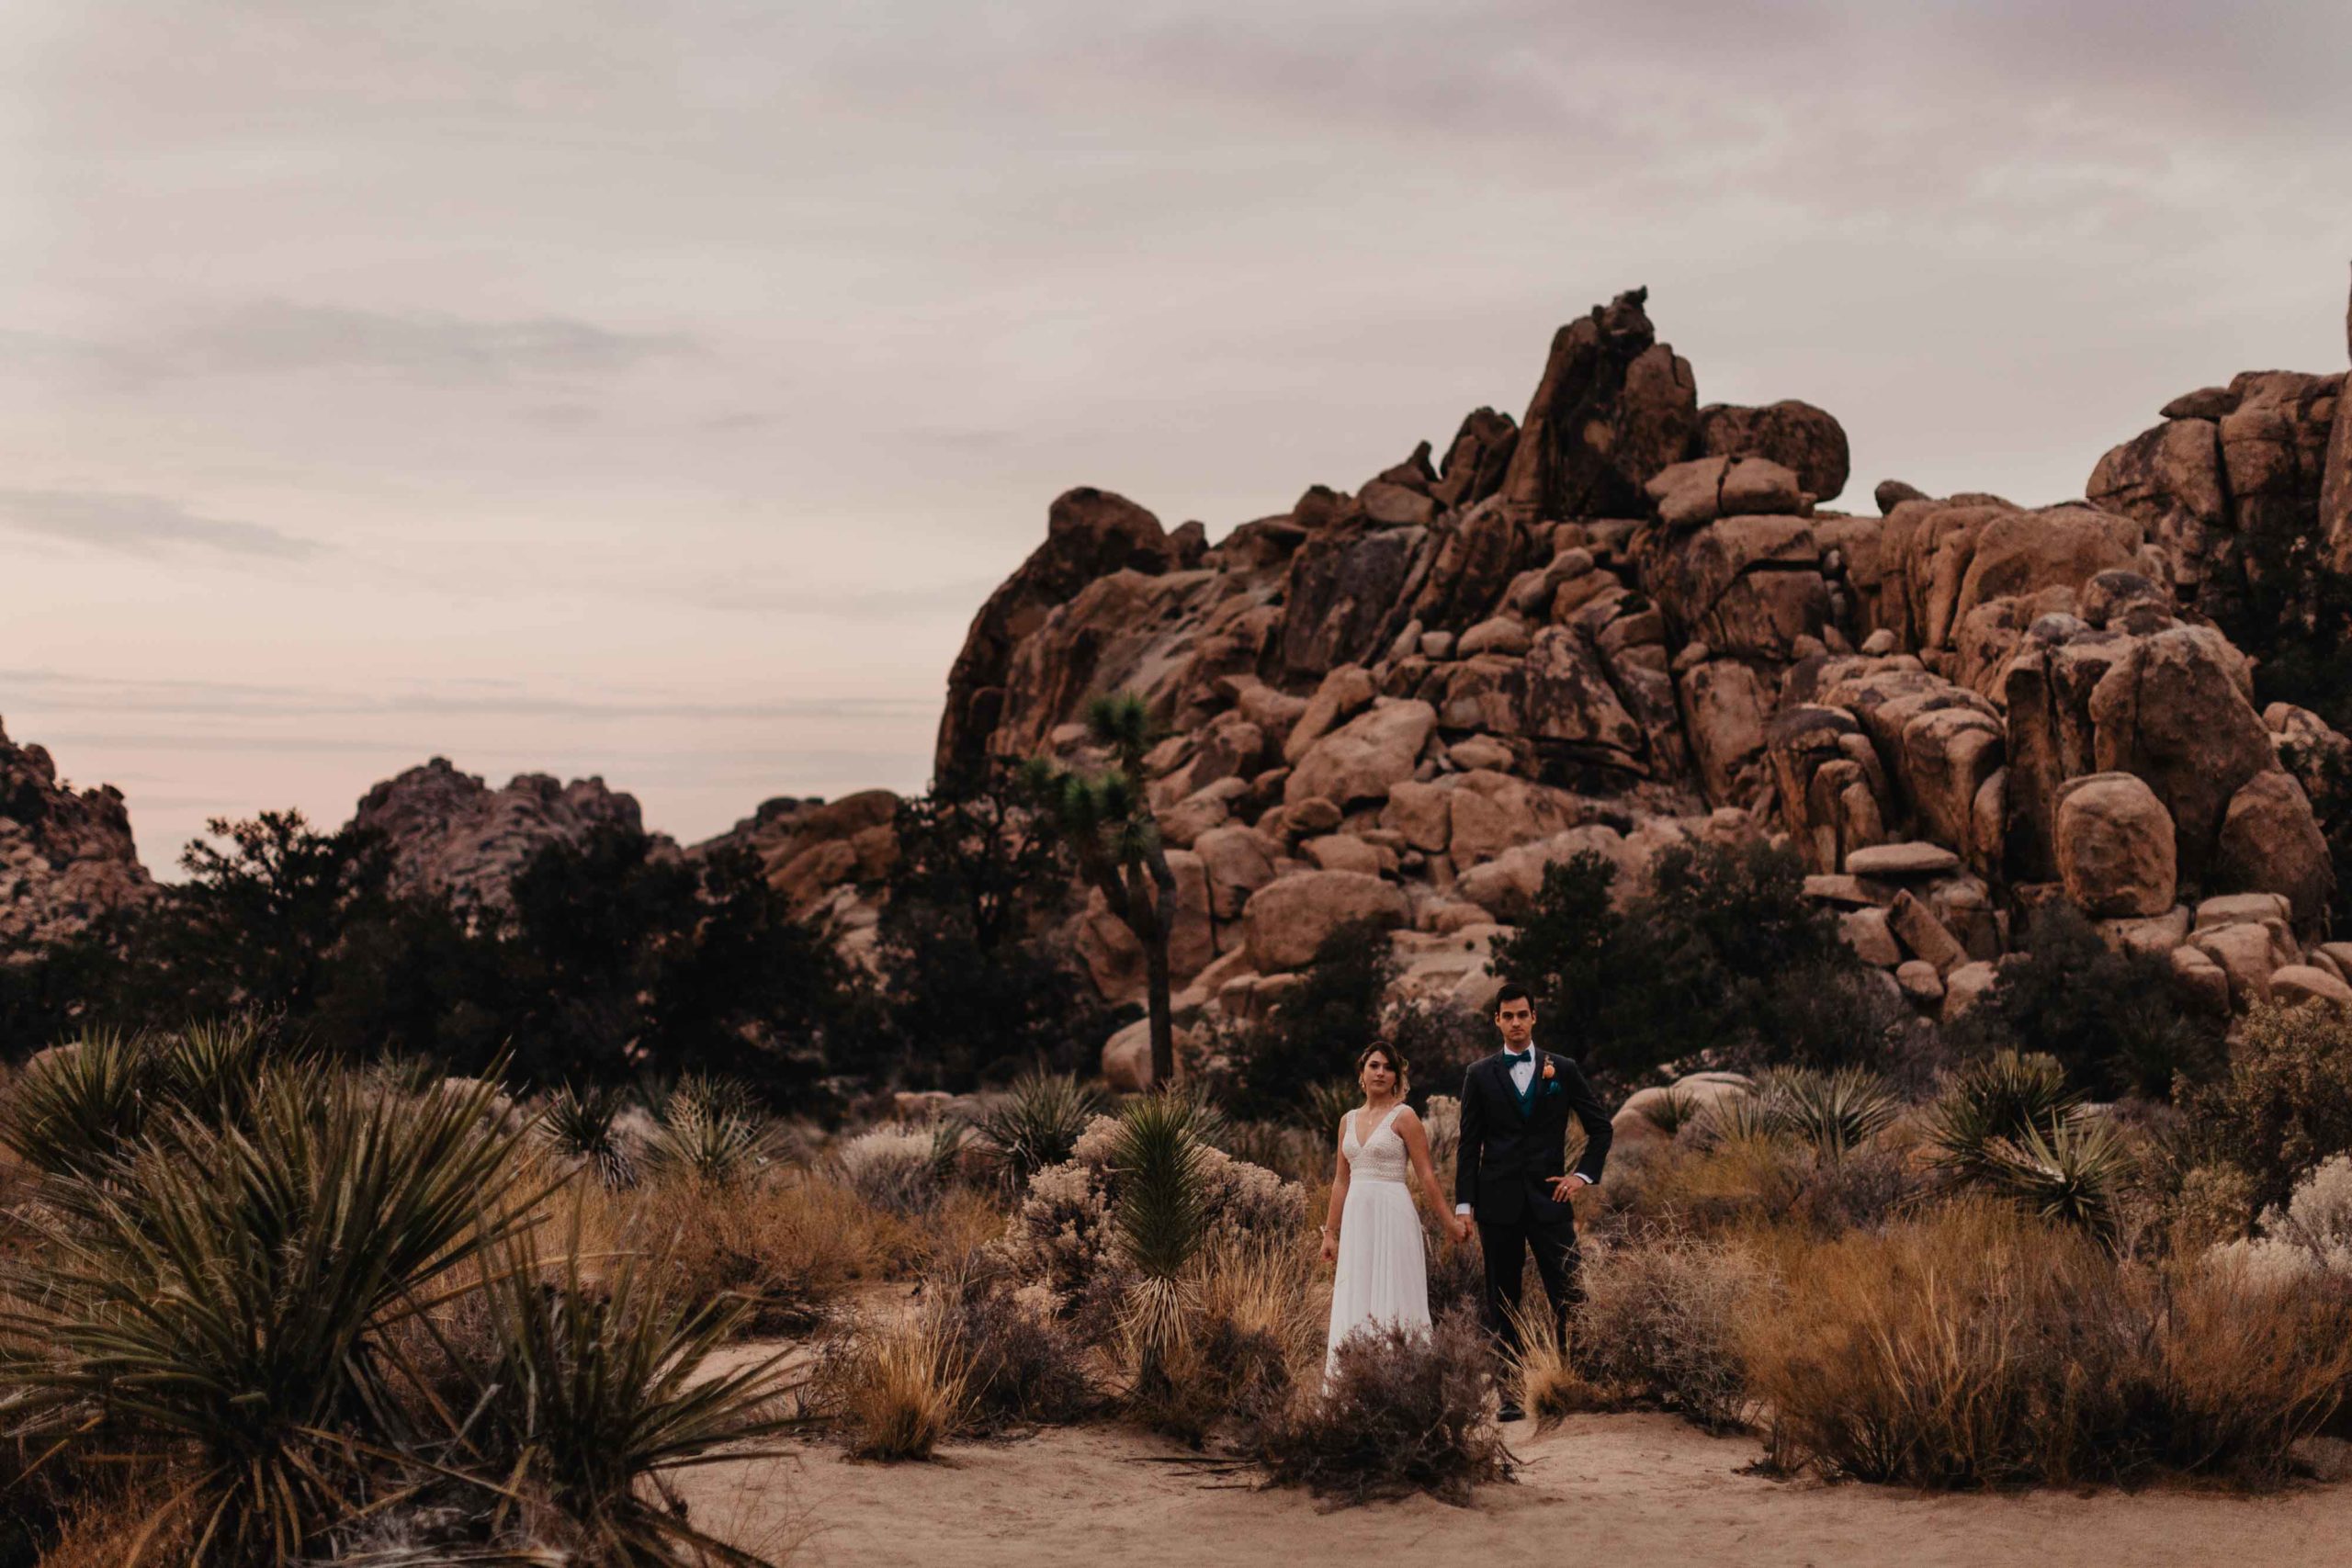 Desert elopement in Joshua Tree National Park captured by adventure wedding photographer Magnolia + Ember.